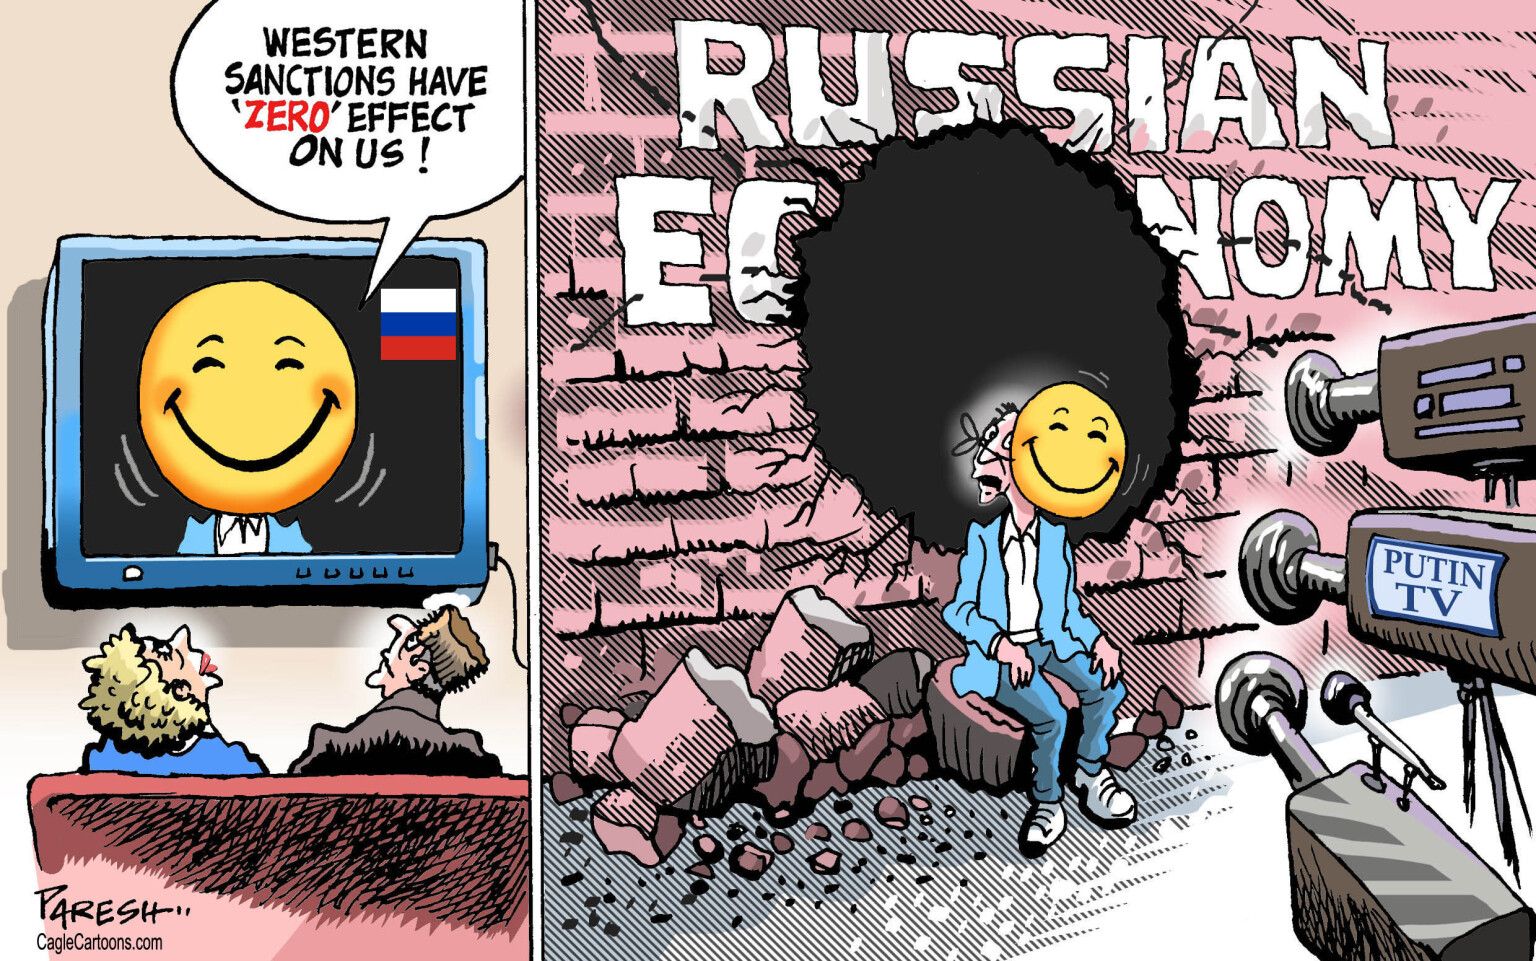 Sanction effect on Russia - editorial cartoon - newsjustin.press